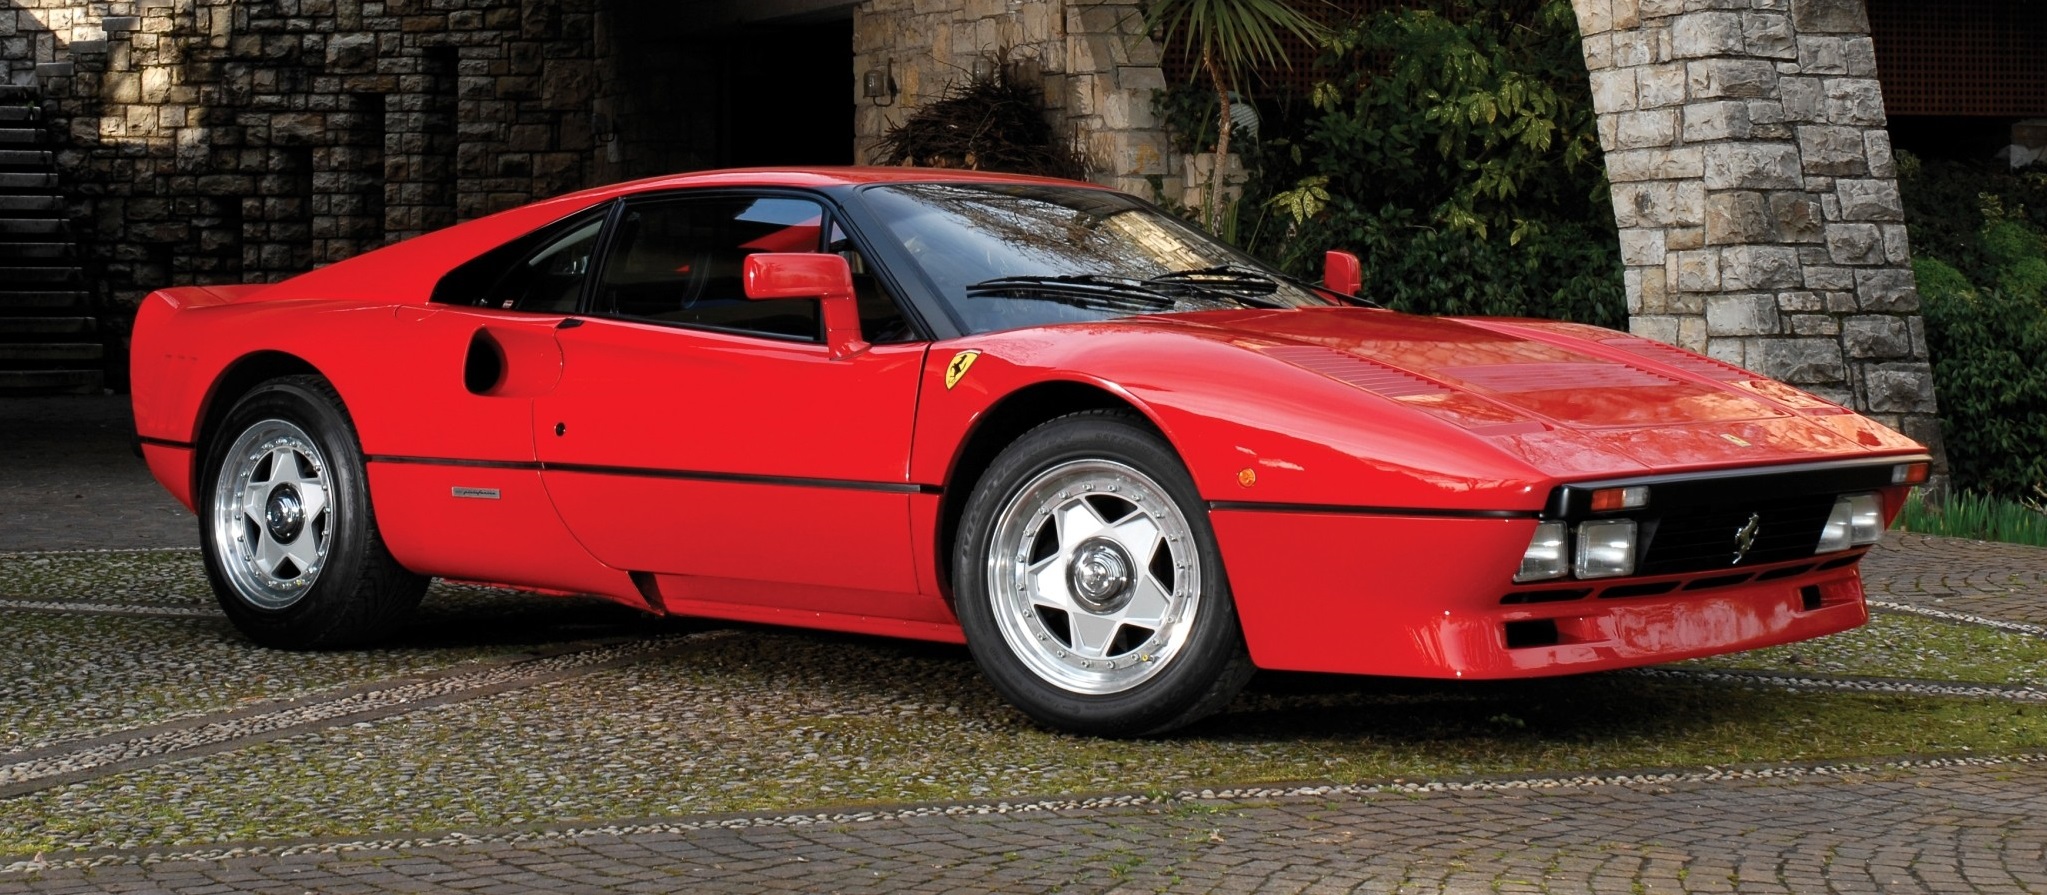 The gorgeous 288 GTO was Ferrari's first serious turbocharged car.